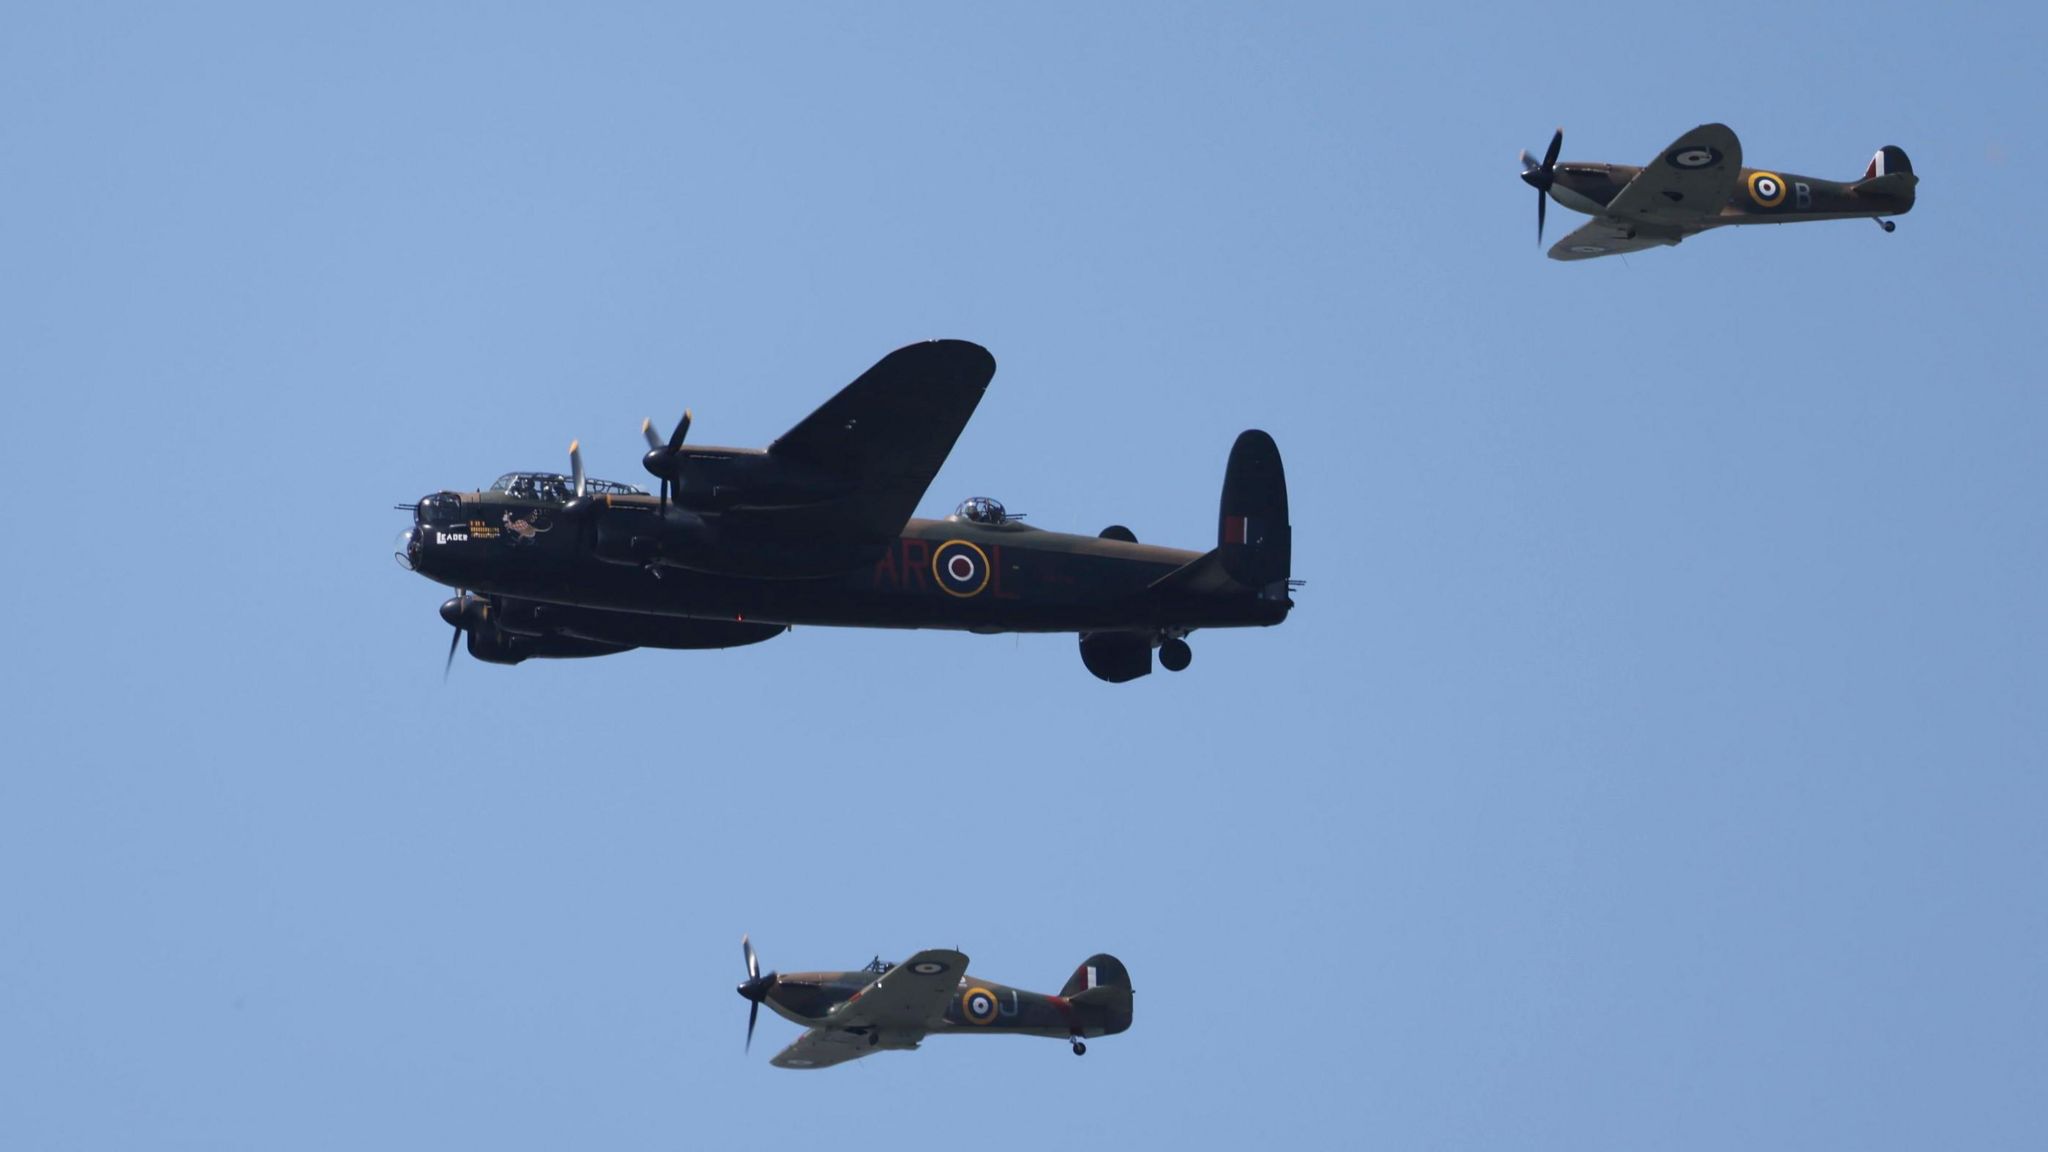 Battle of Britain Memorial Flight planes in the air